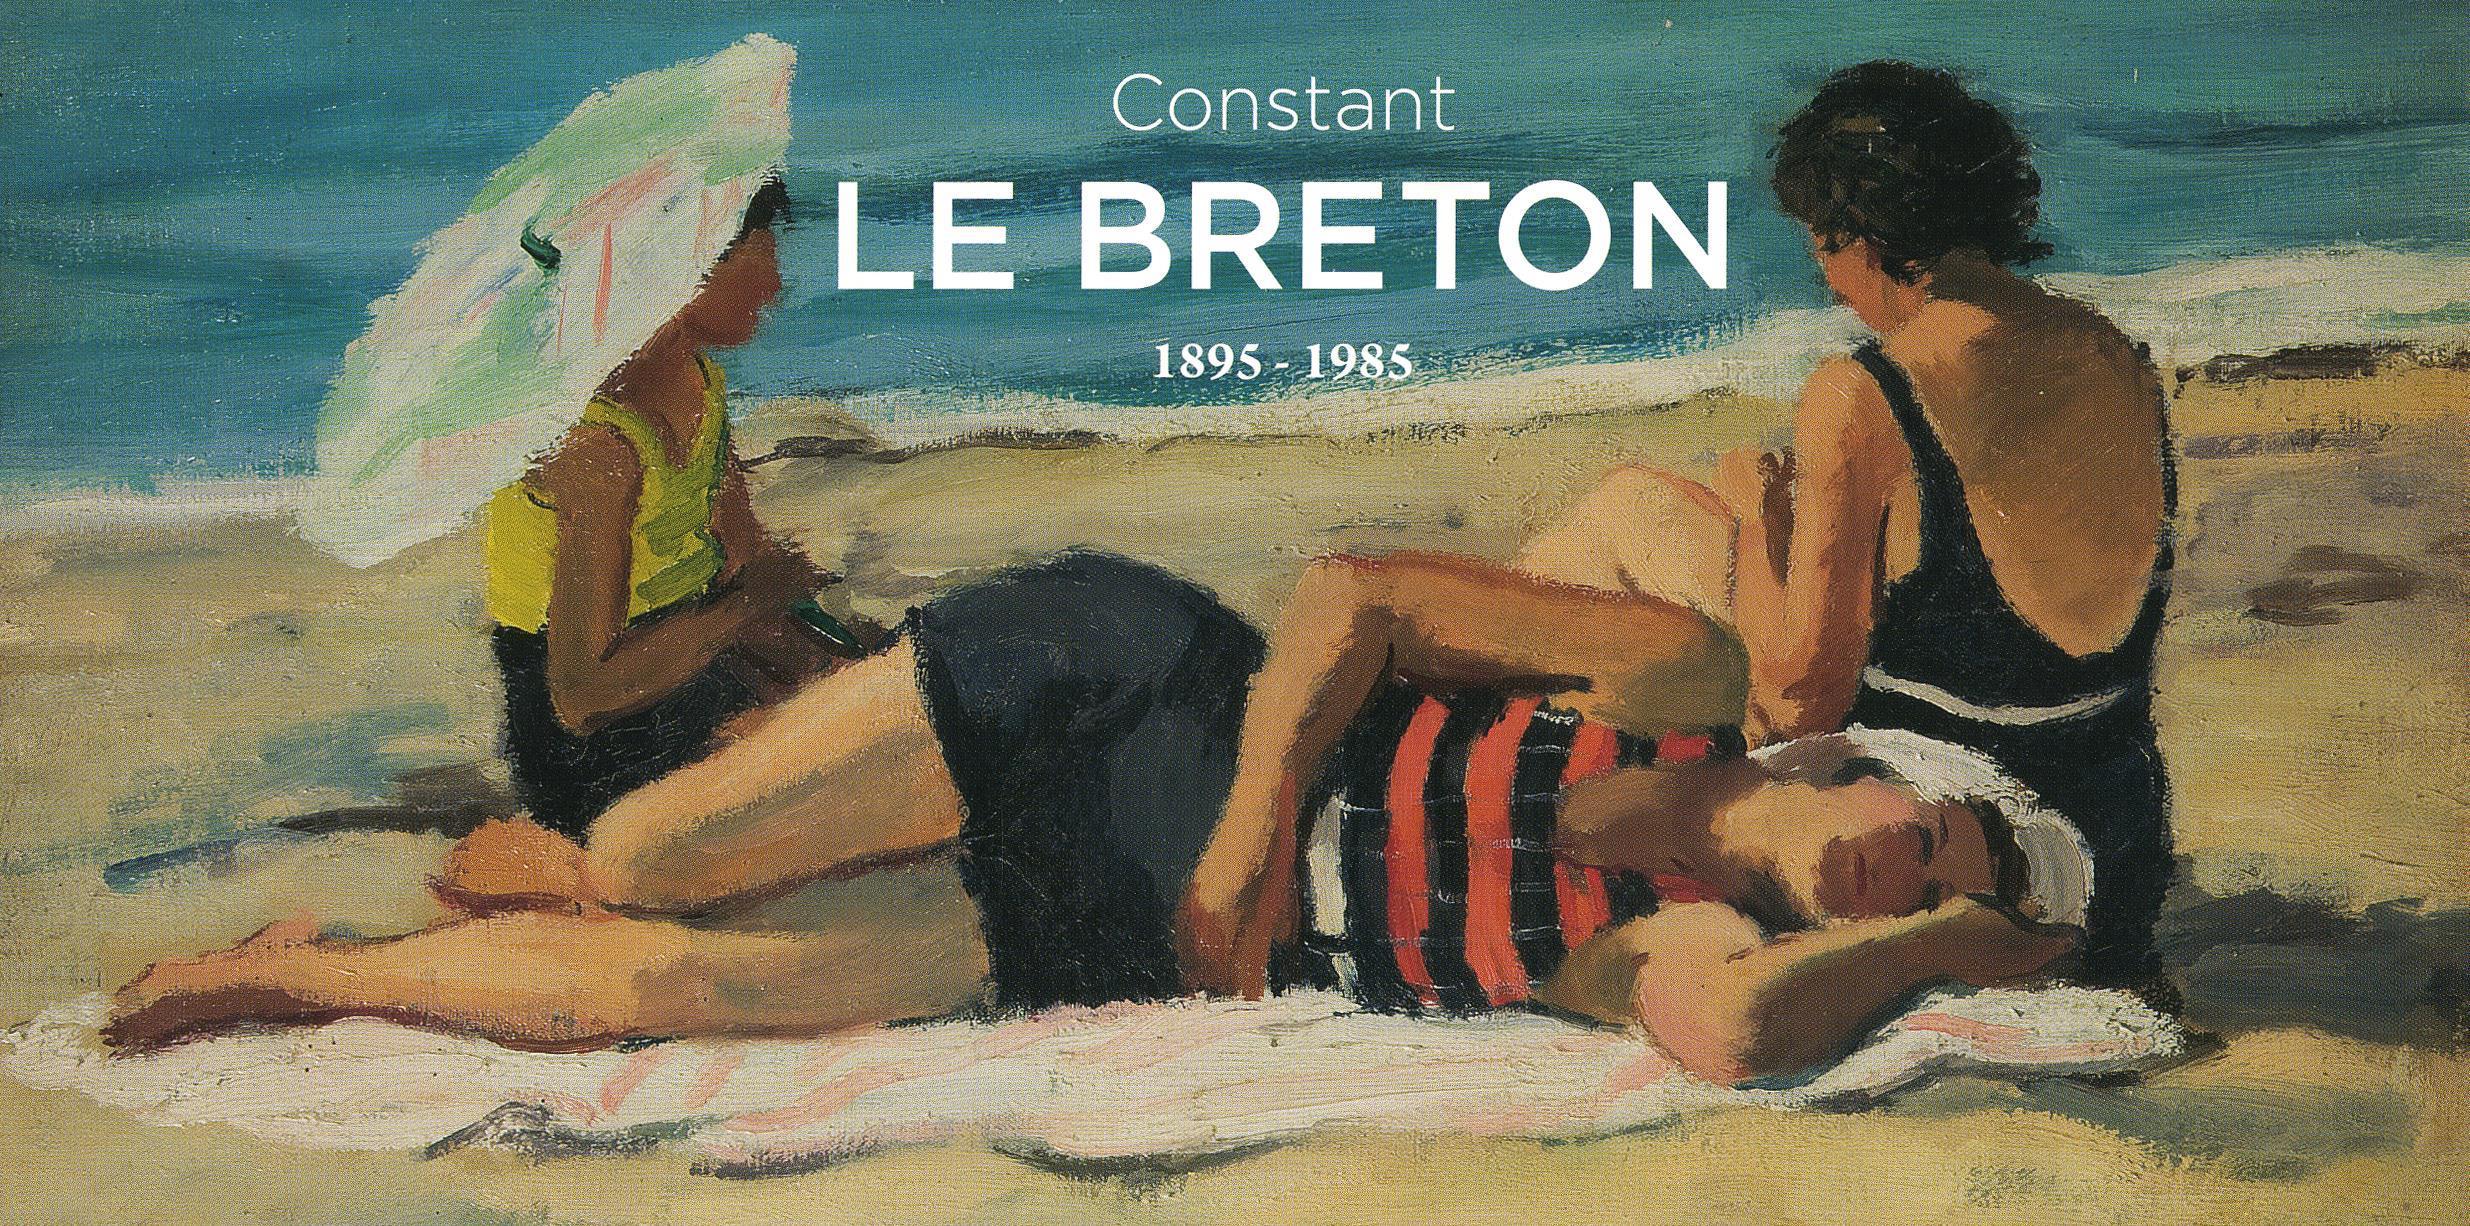 Constant Le Breton (1895 – 1985)